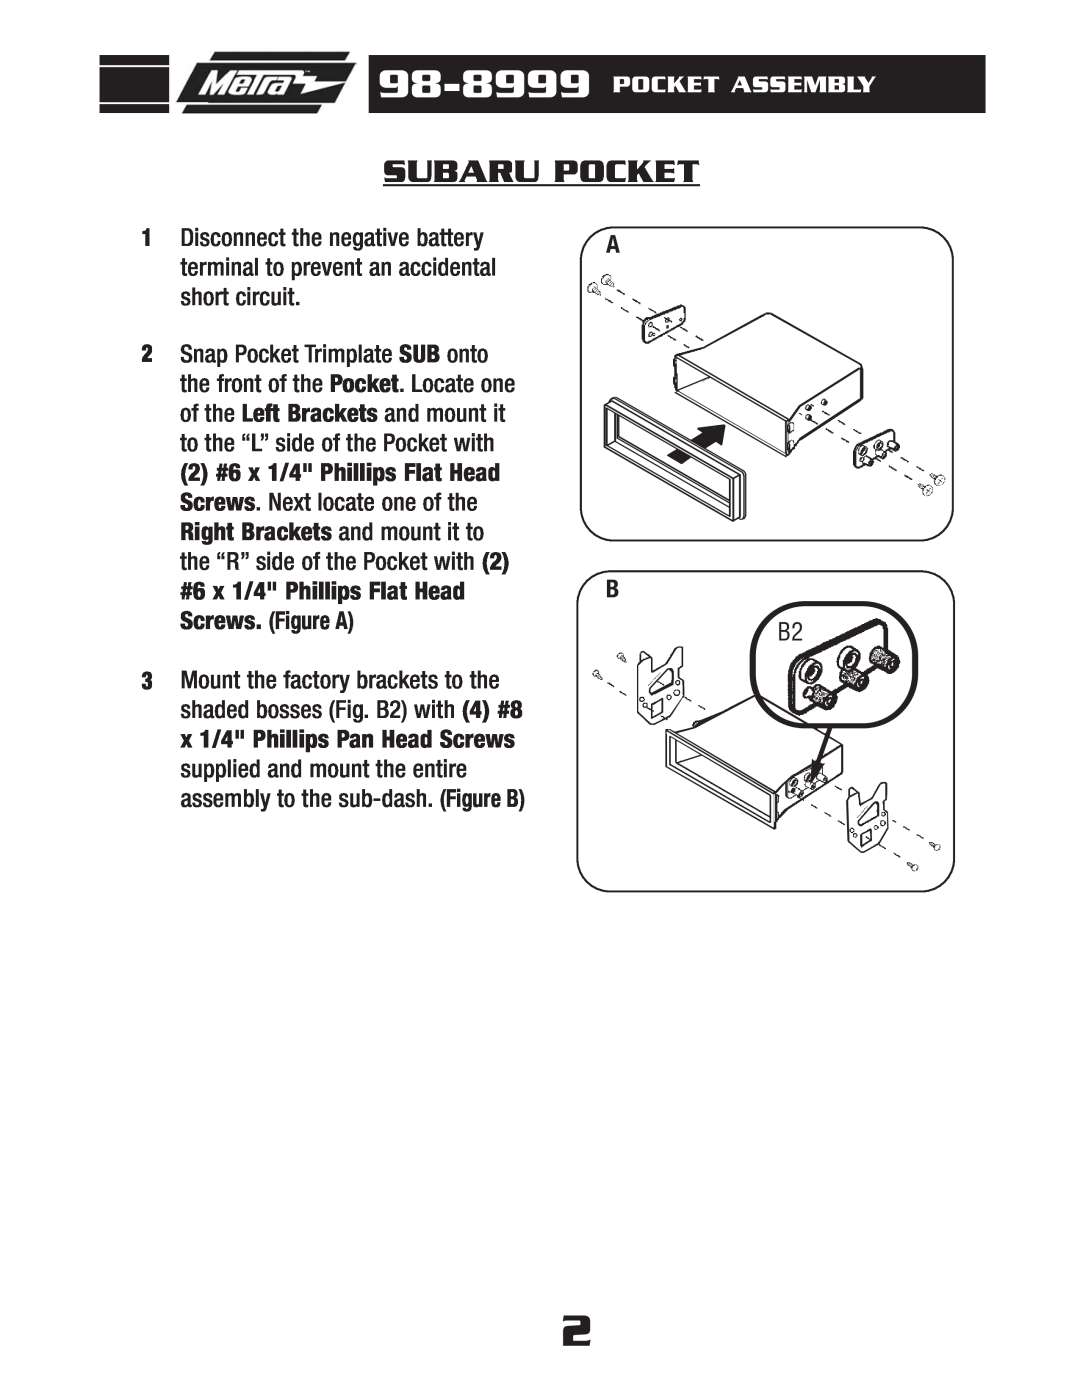 Metra Electronics 98-8999 installation instructions Subaru Pocket, Pocket Assembly 